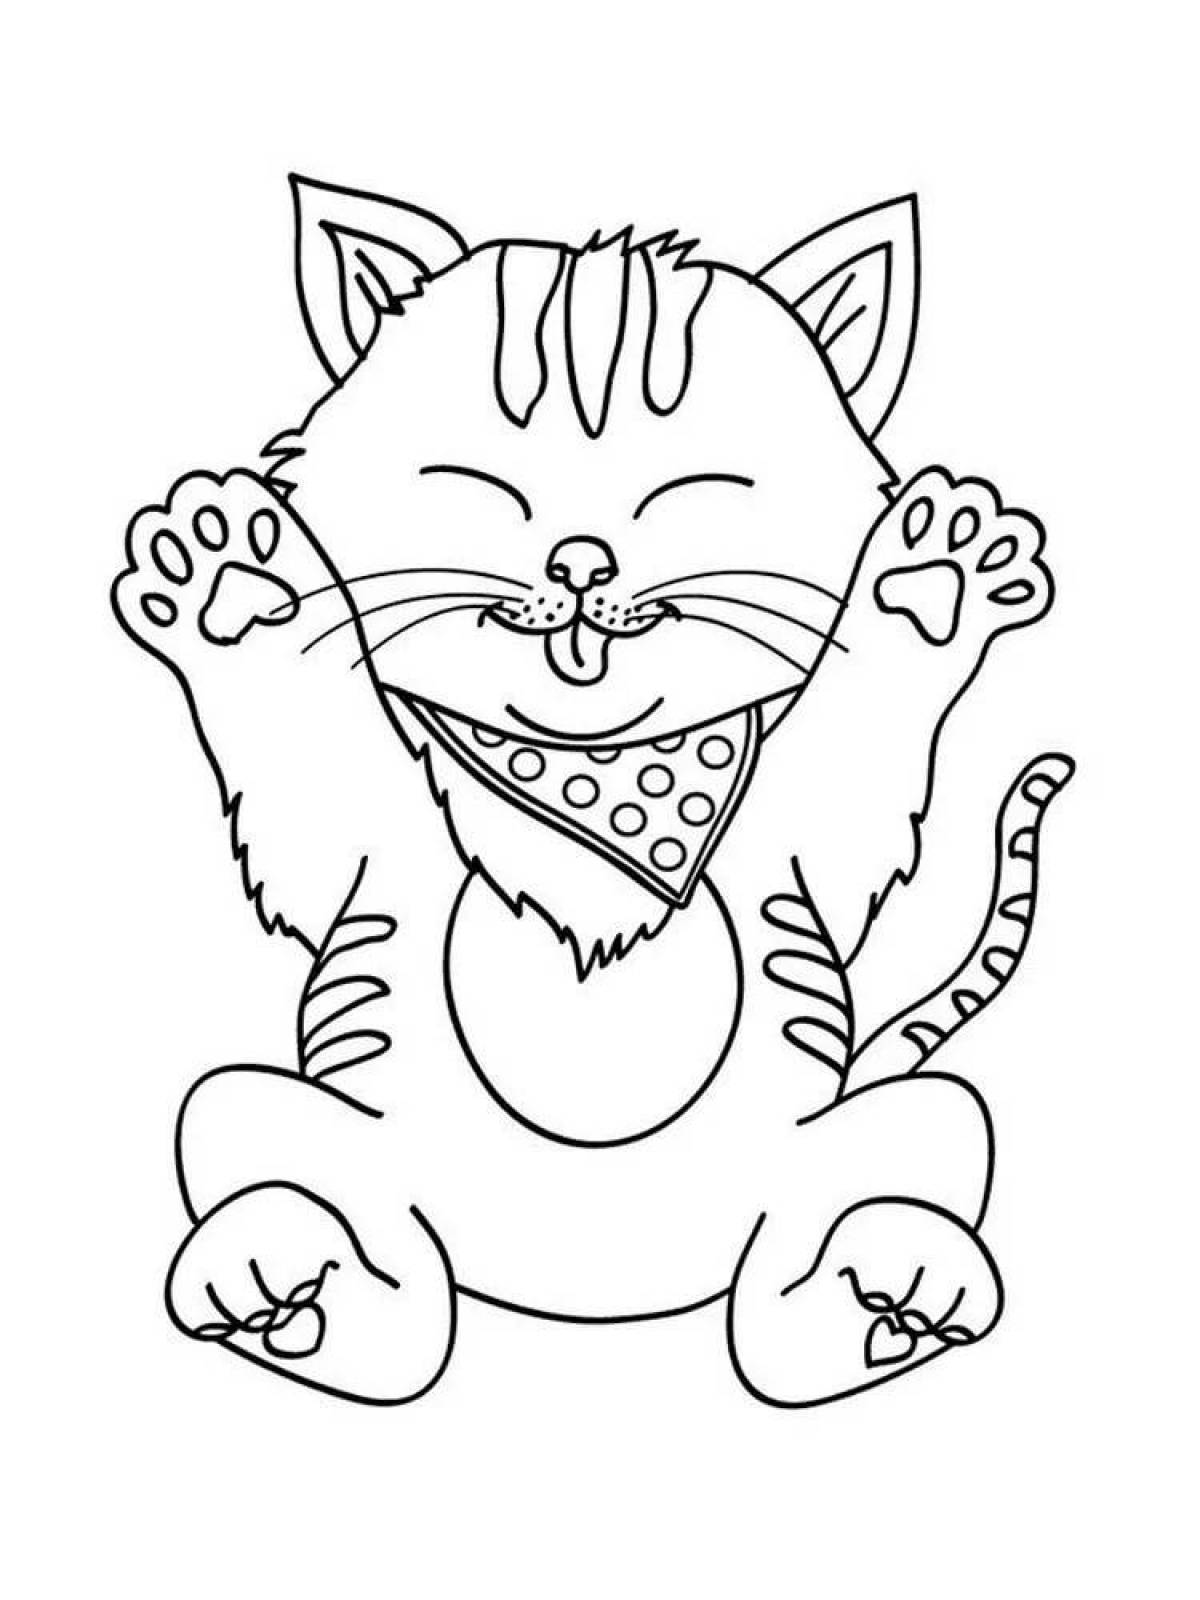 Adorable cartoon cat coloring book